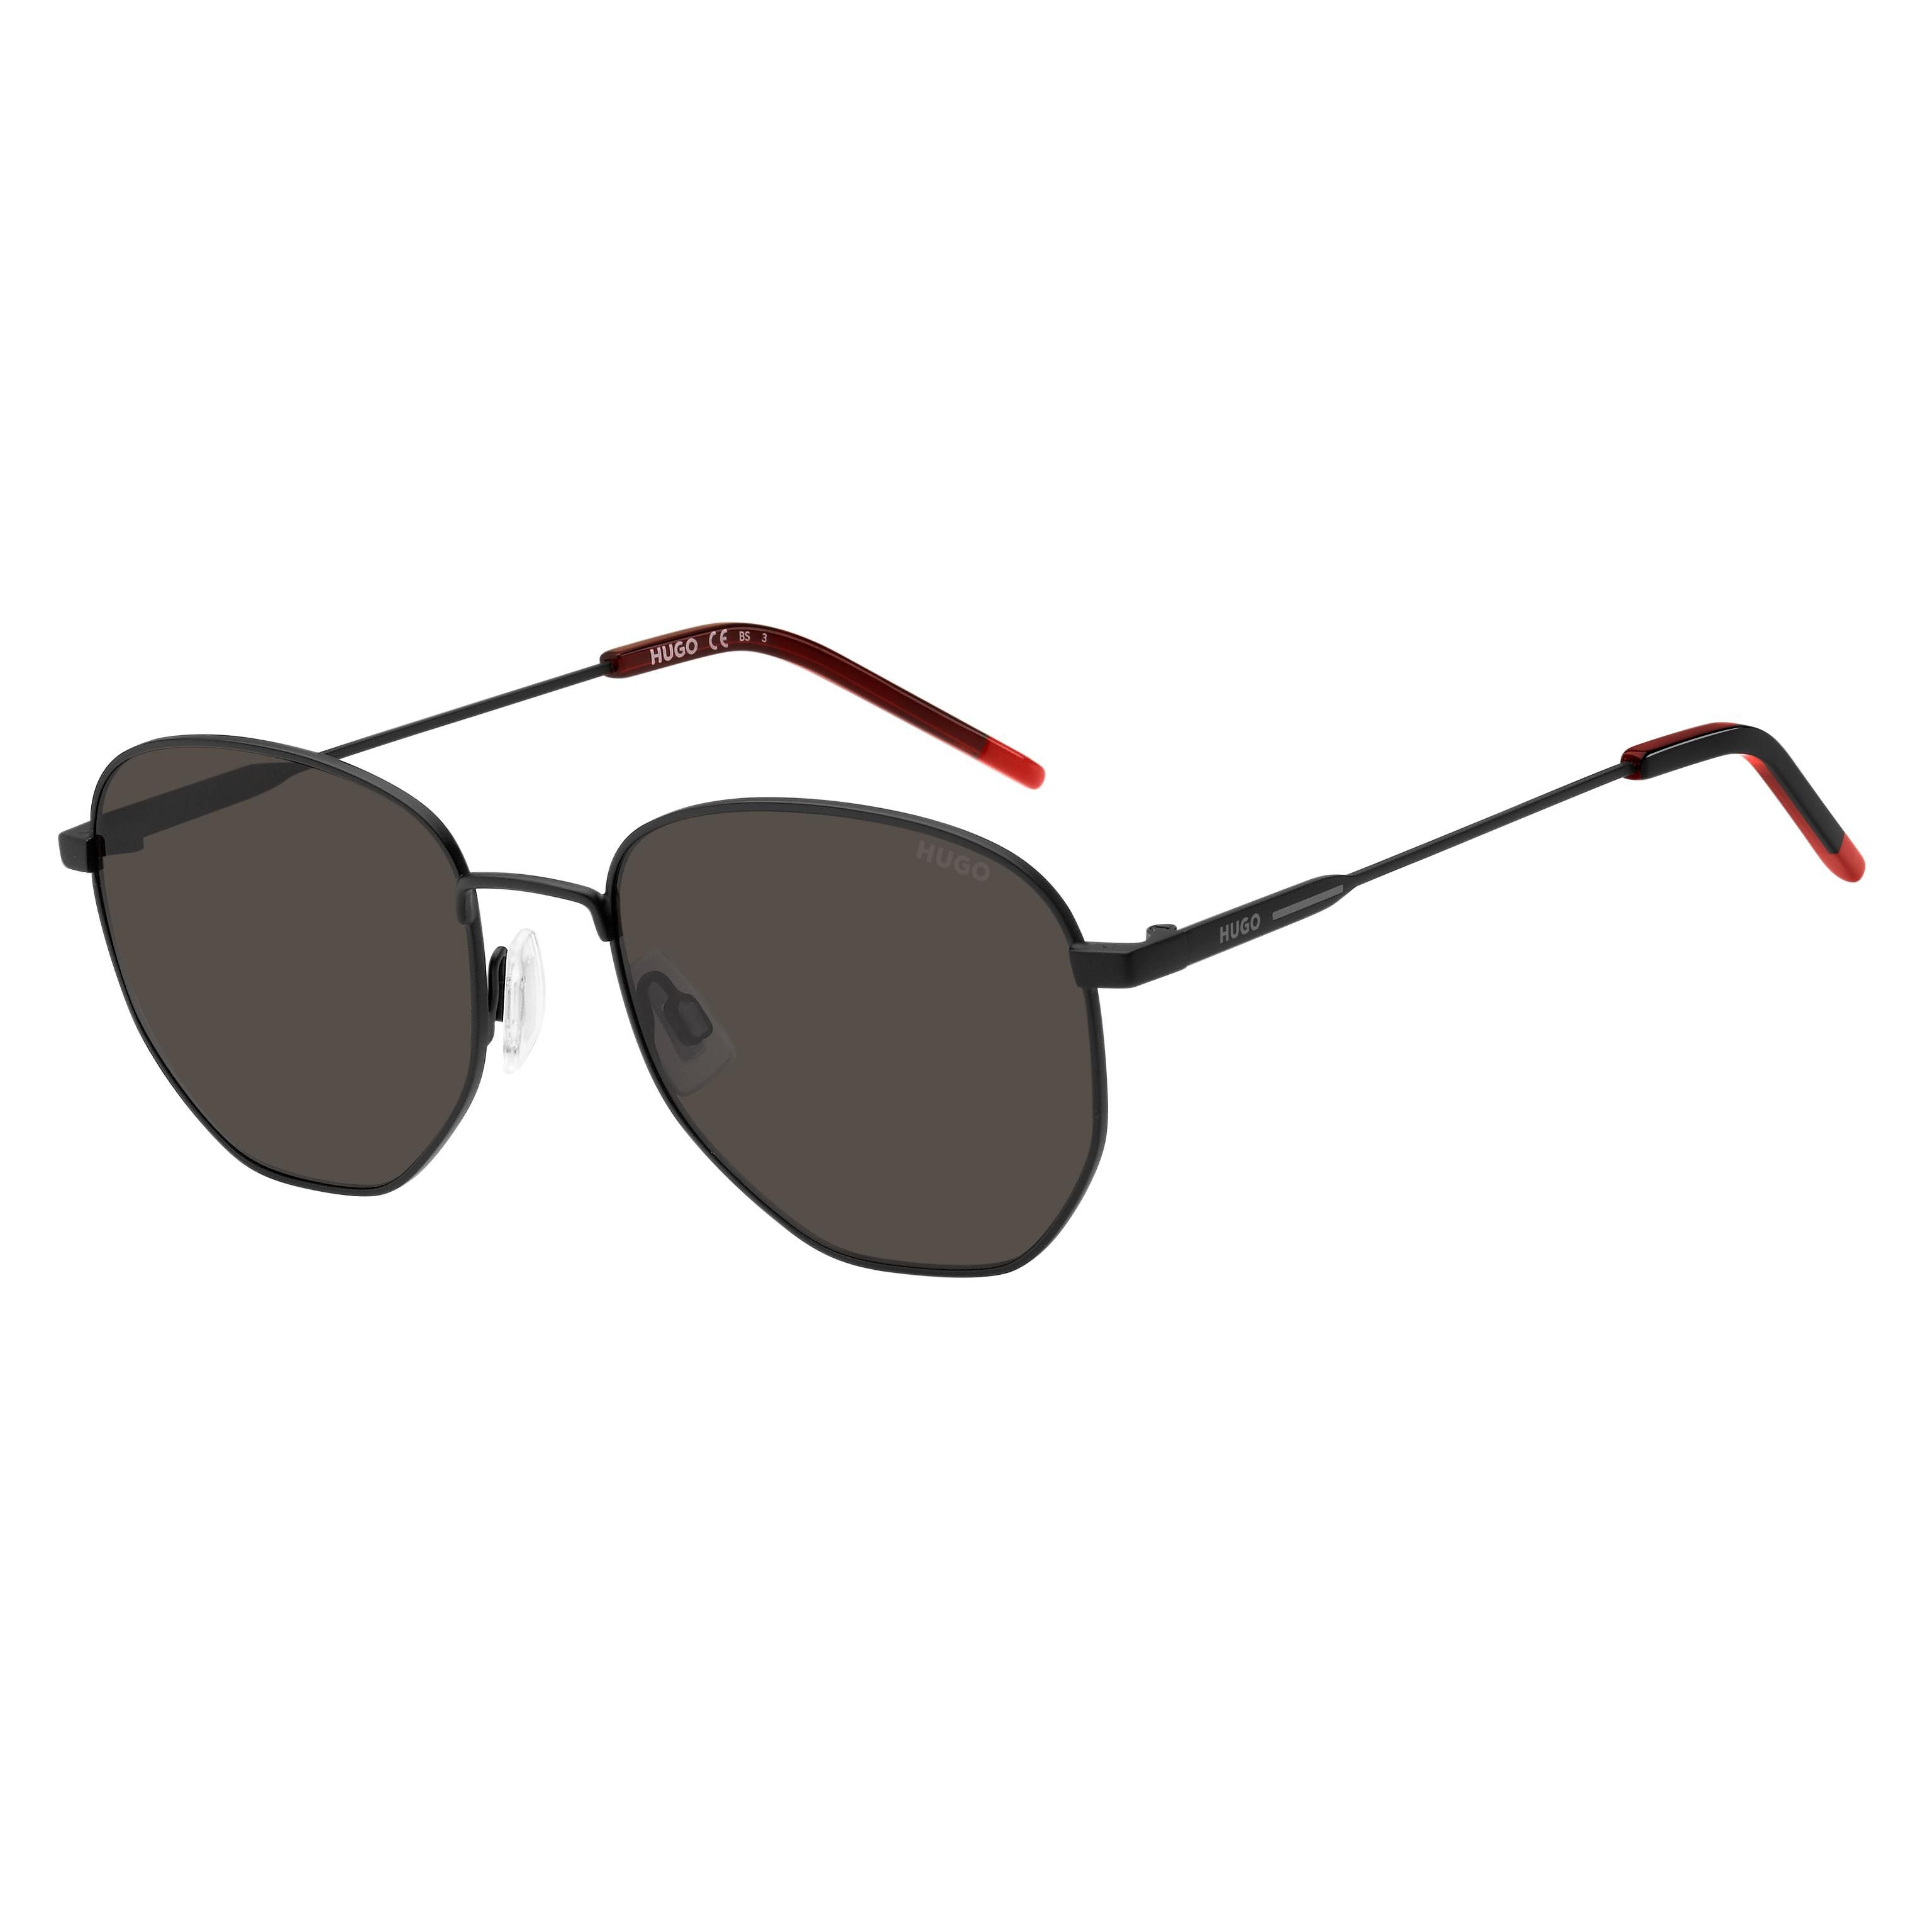 HG 1178 S Round Sunglasses 003 - size 55